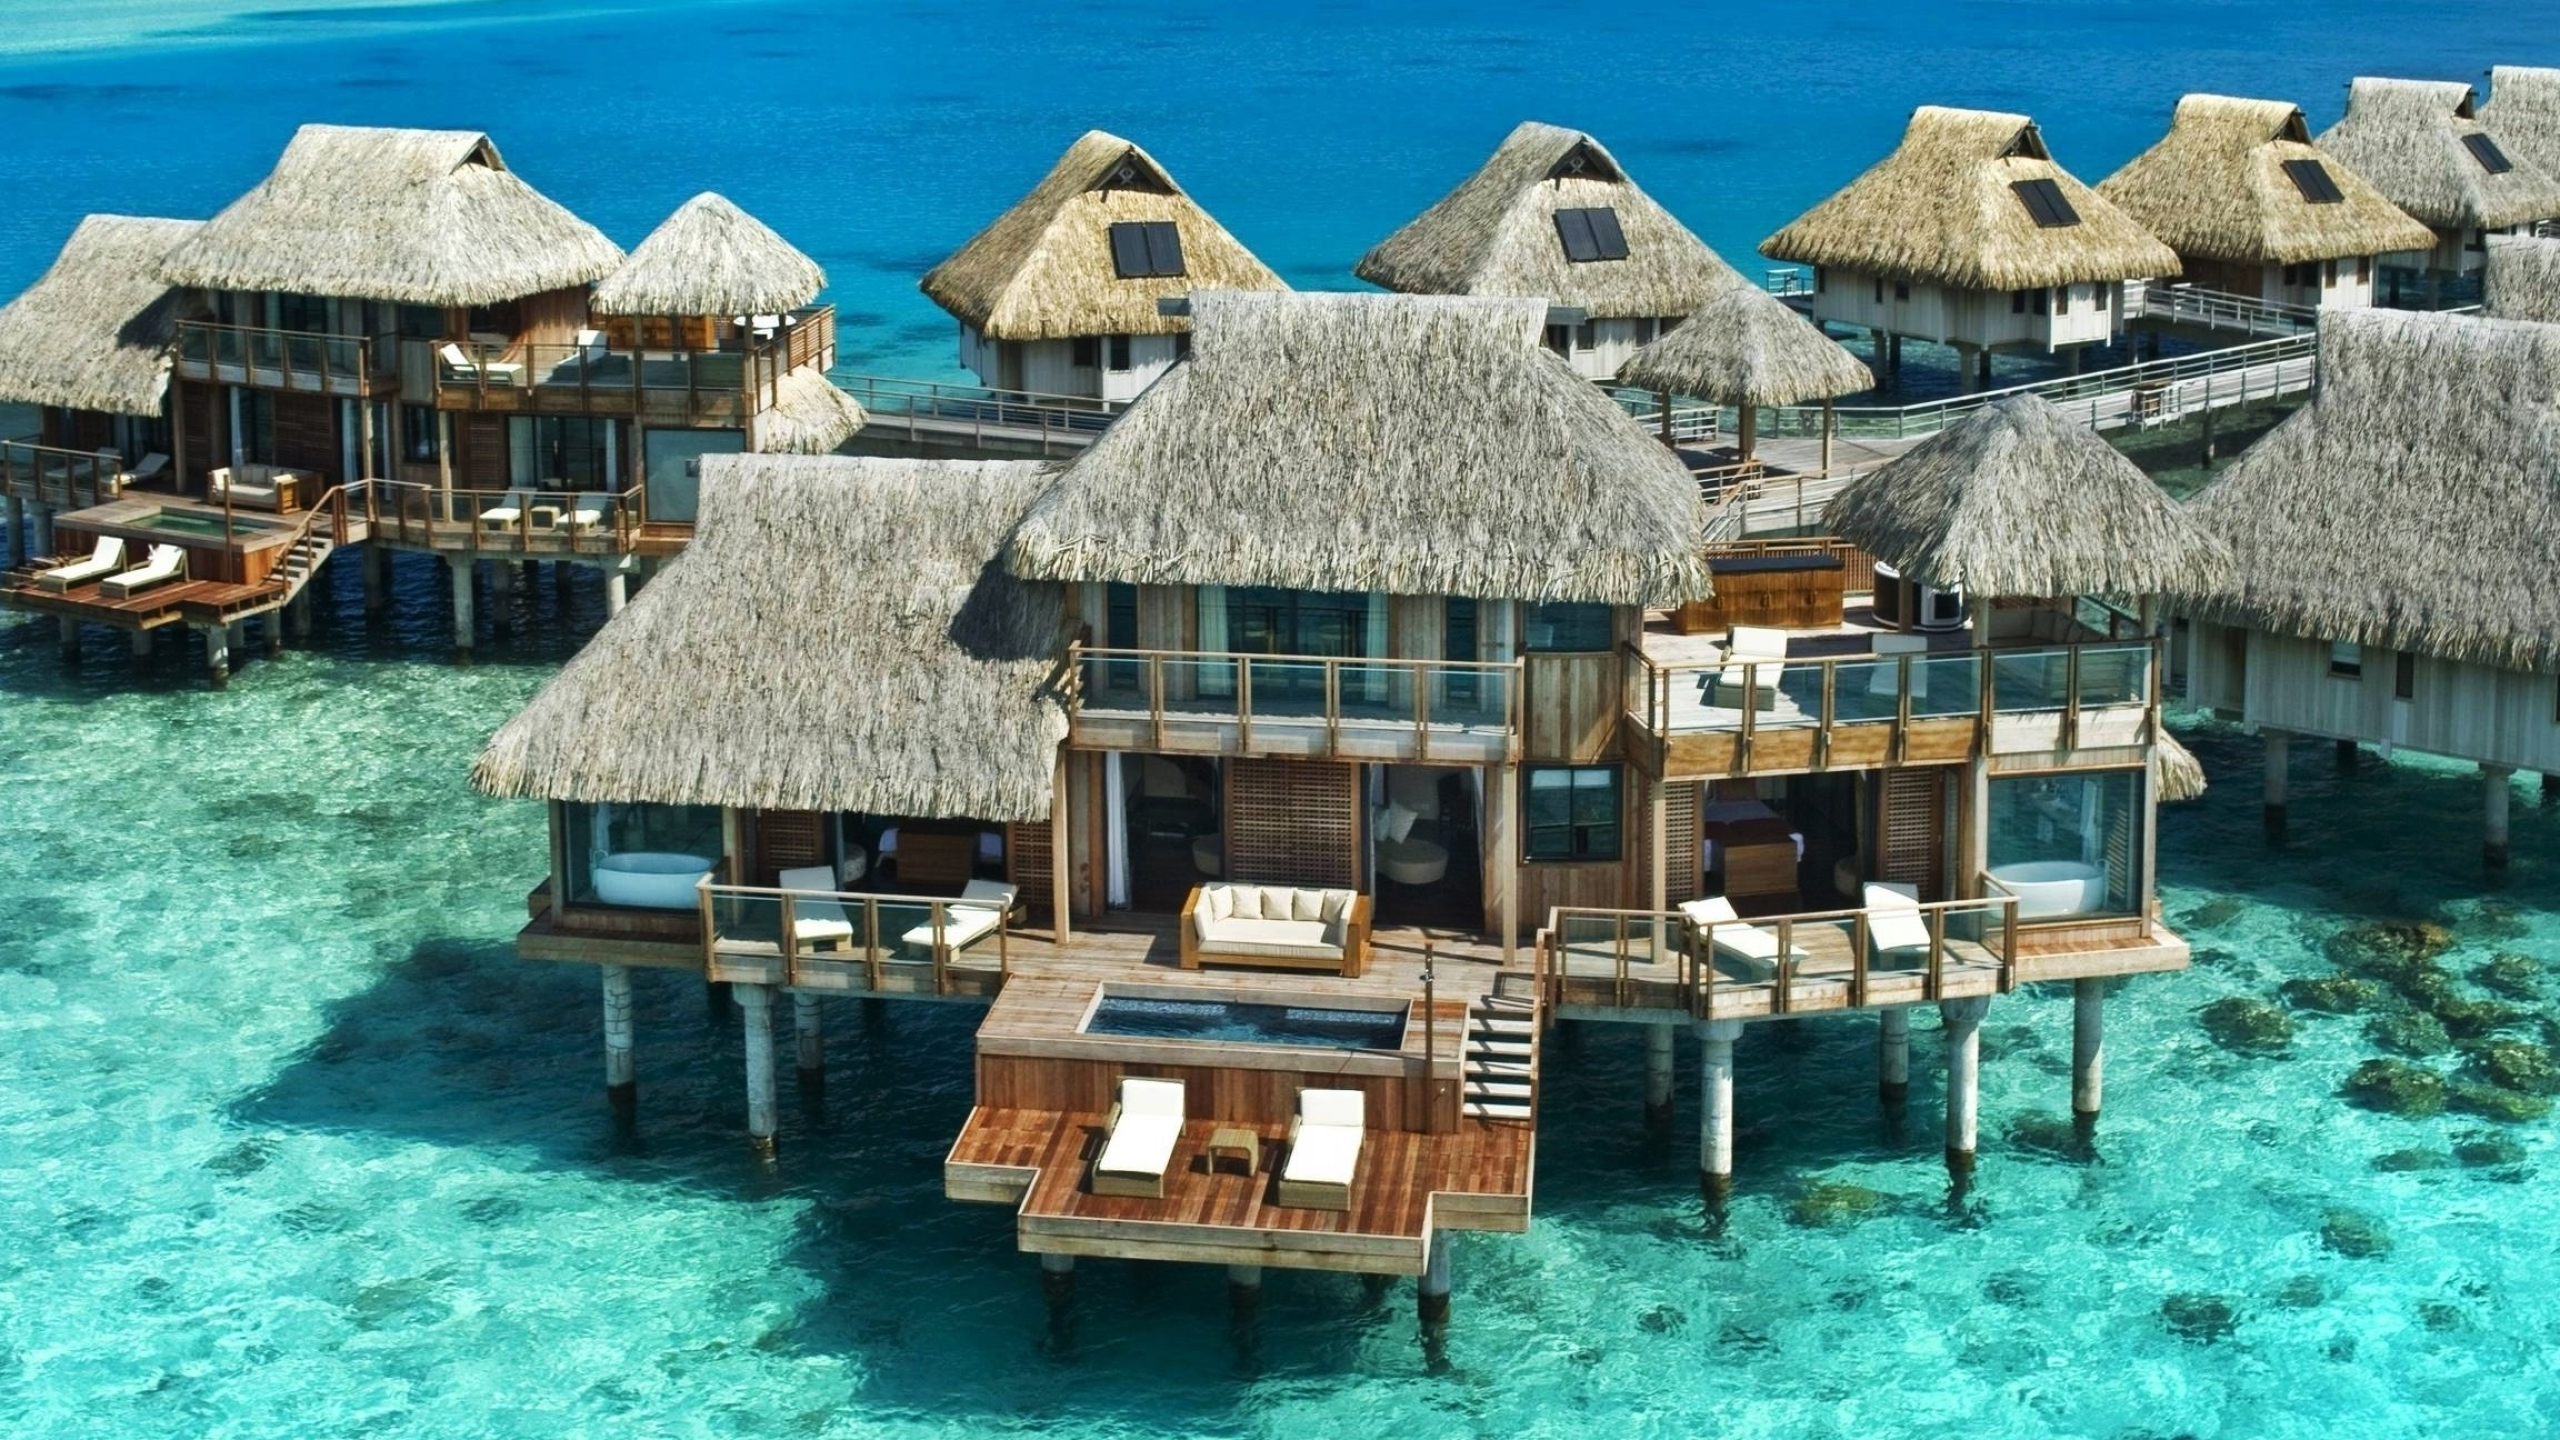 Bora Bora: Luxury resort above the water, Tropical islands for beach vacation. 2560x1440 HD Wallpaper.